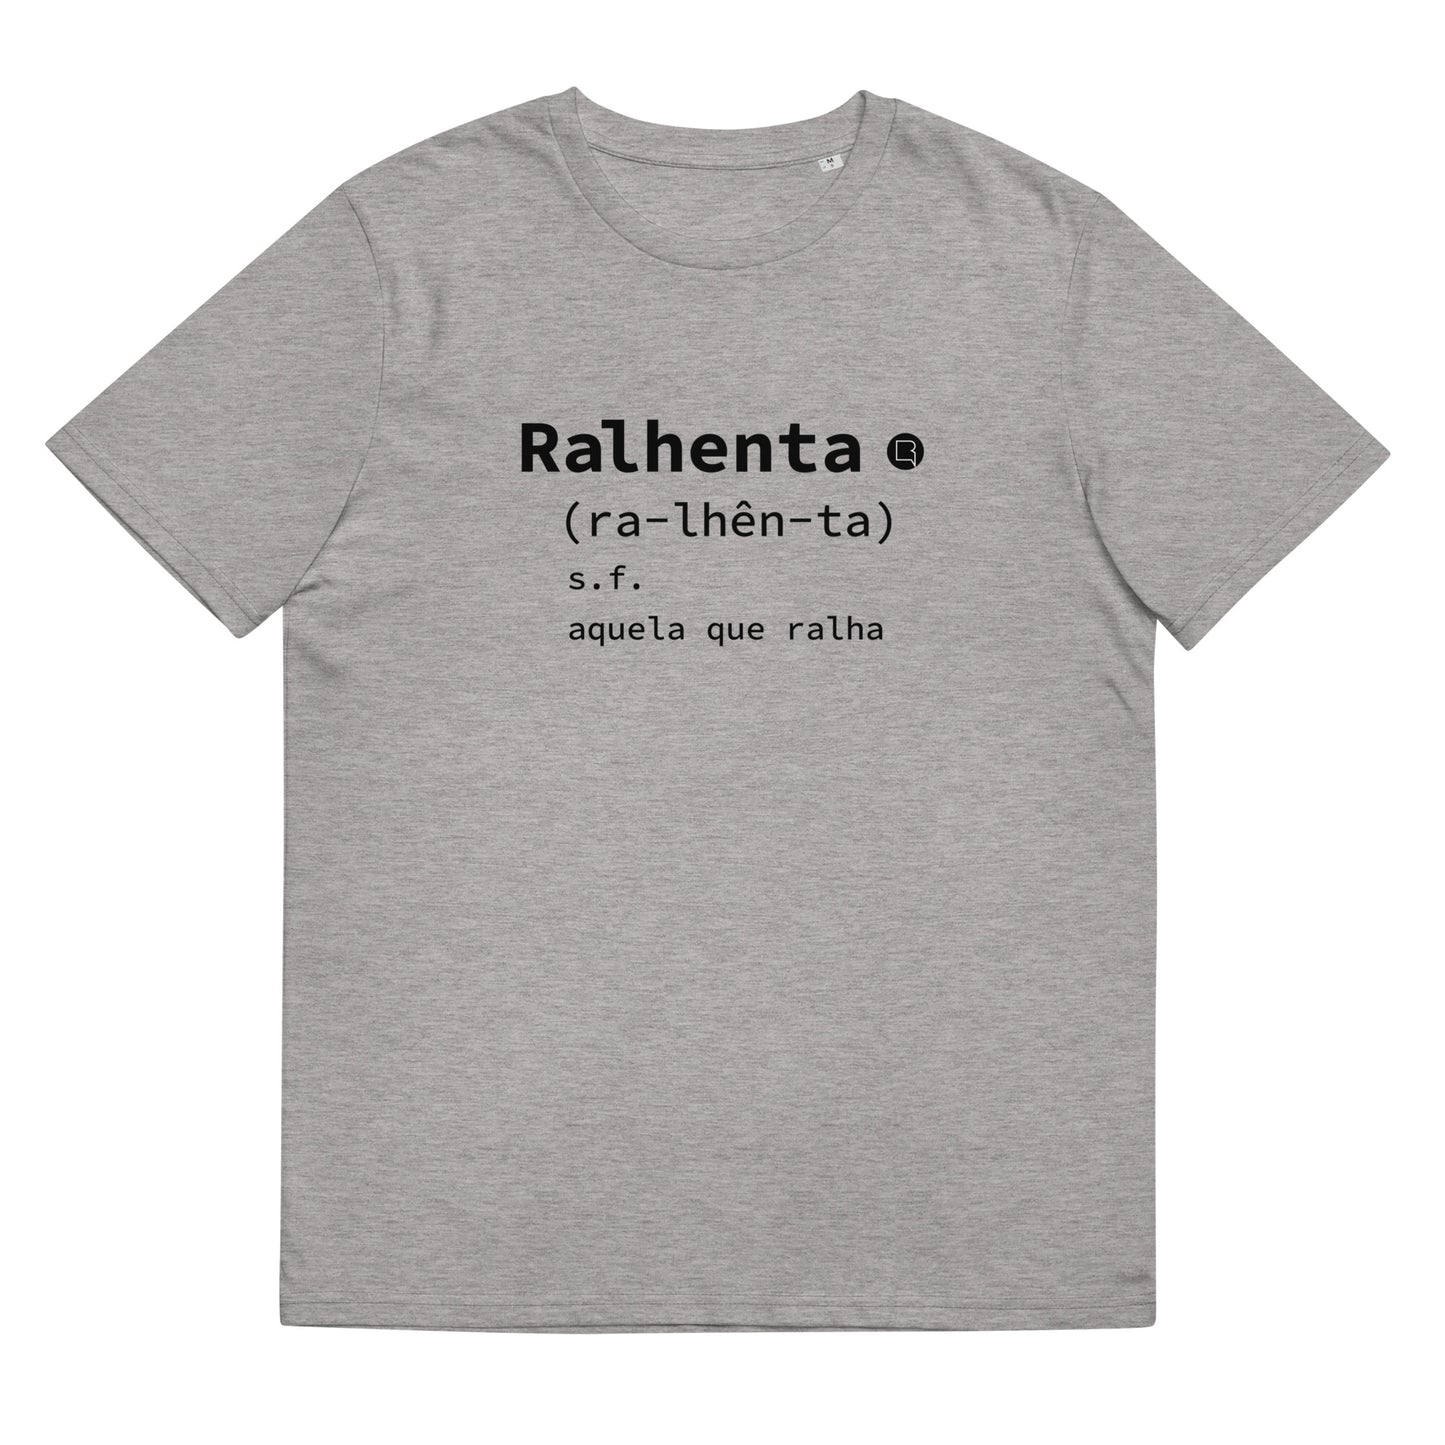 T-shirt Ralhenta Aquela que ralha